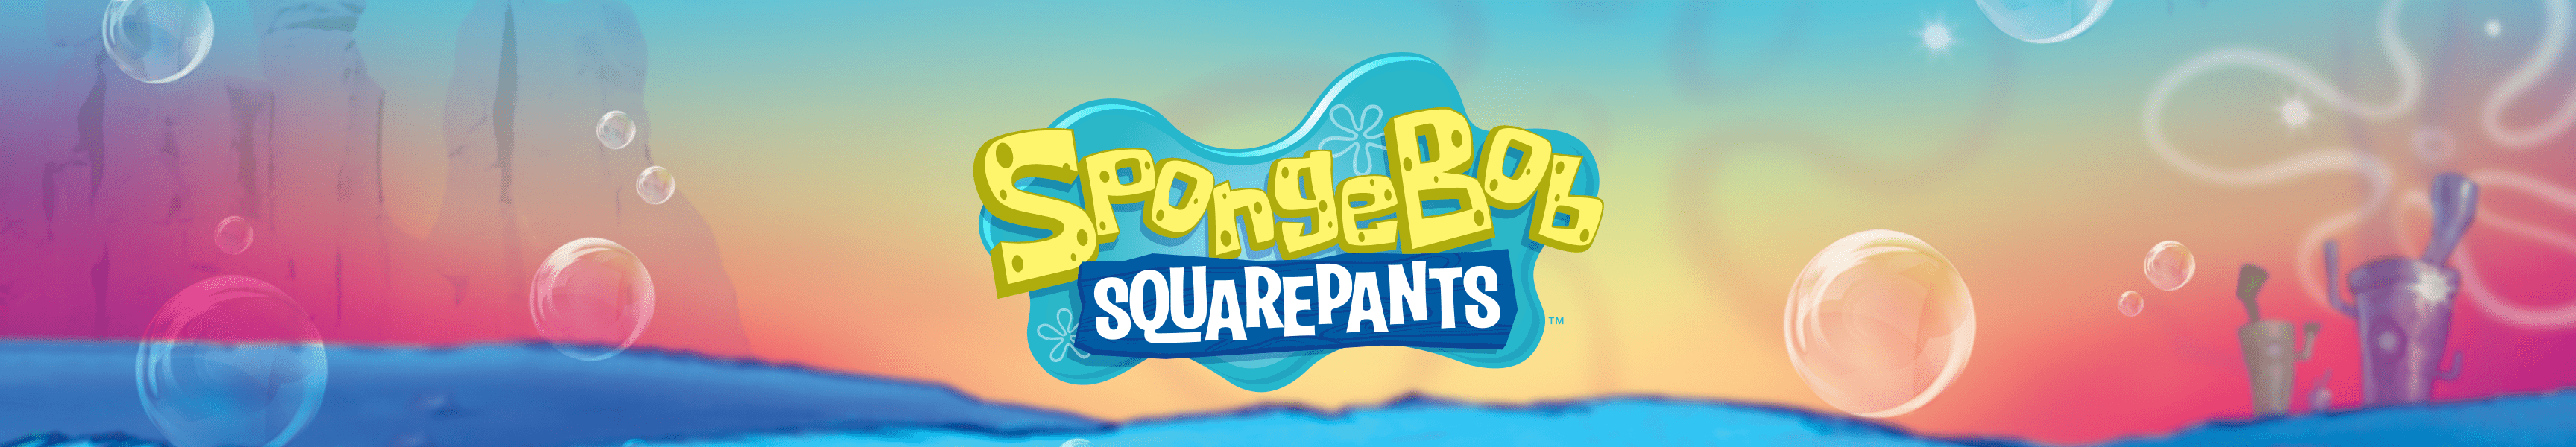 SpongeBob SquarePants Patrick Star